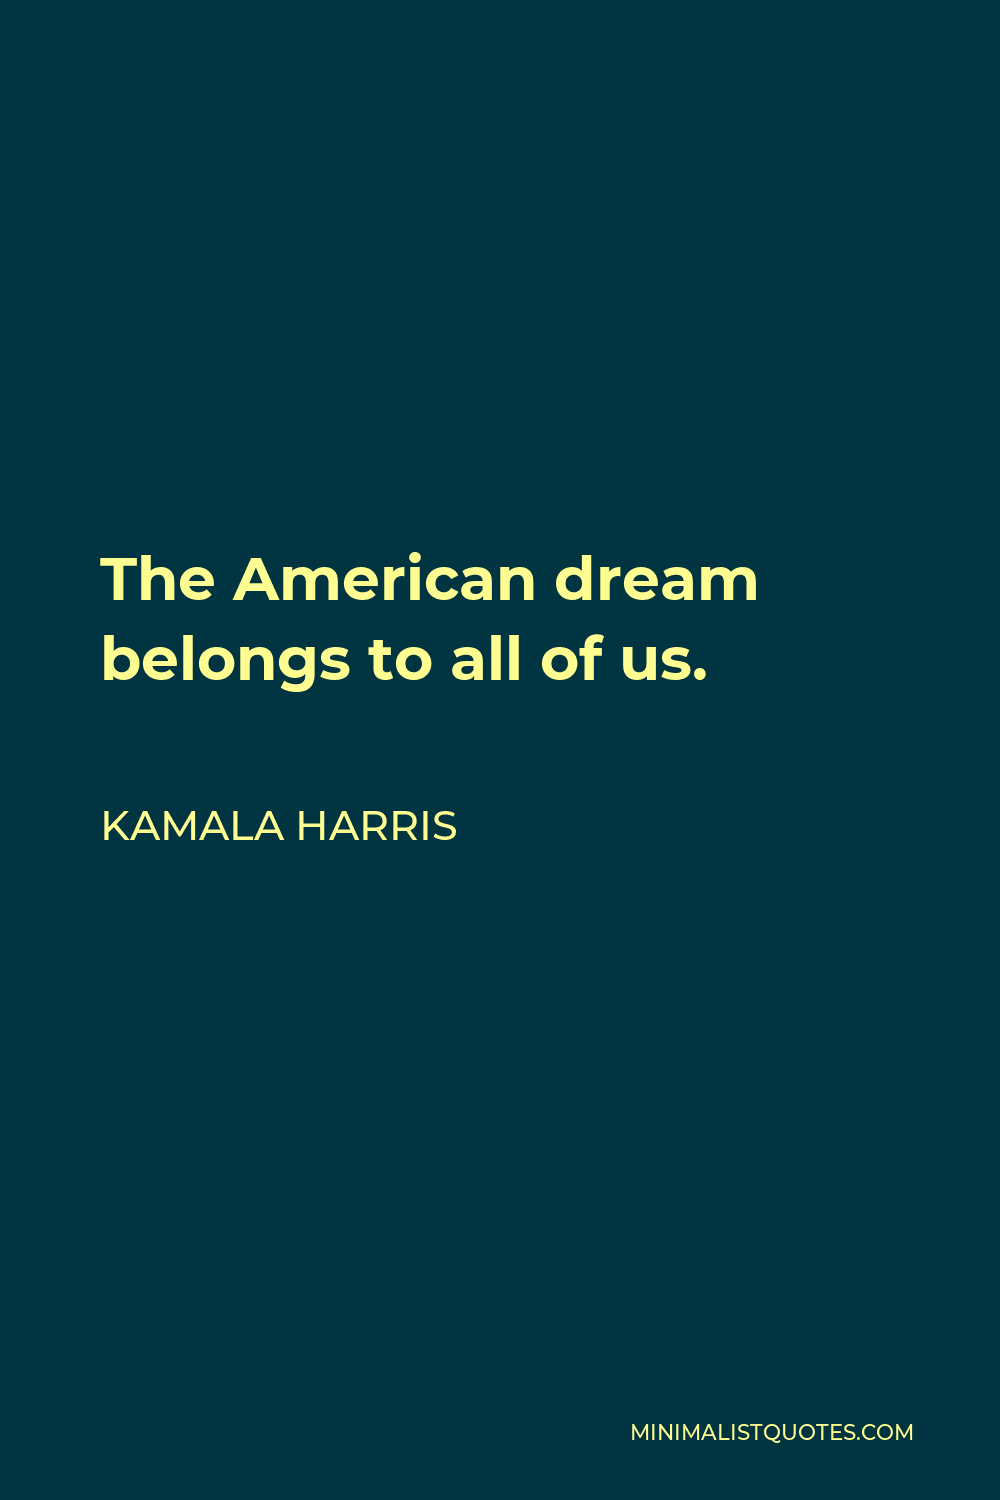 Kamala Harris - The American dream belongs to all of us.